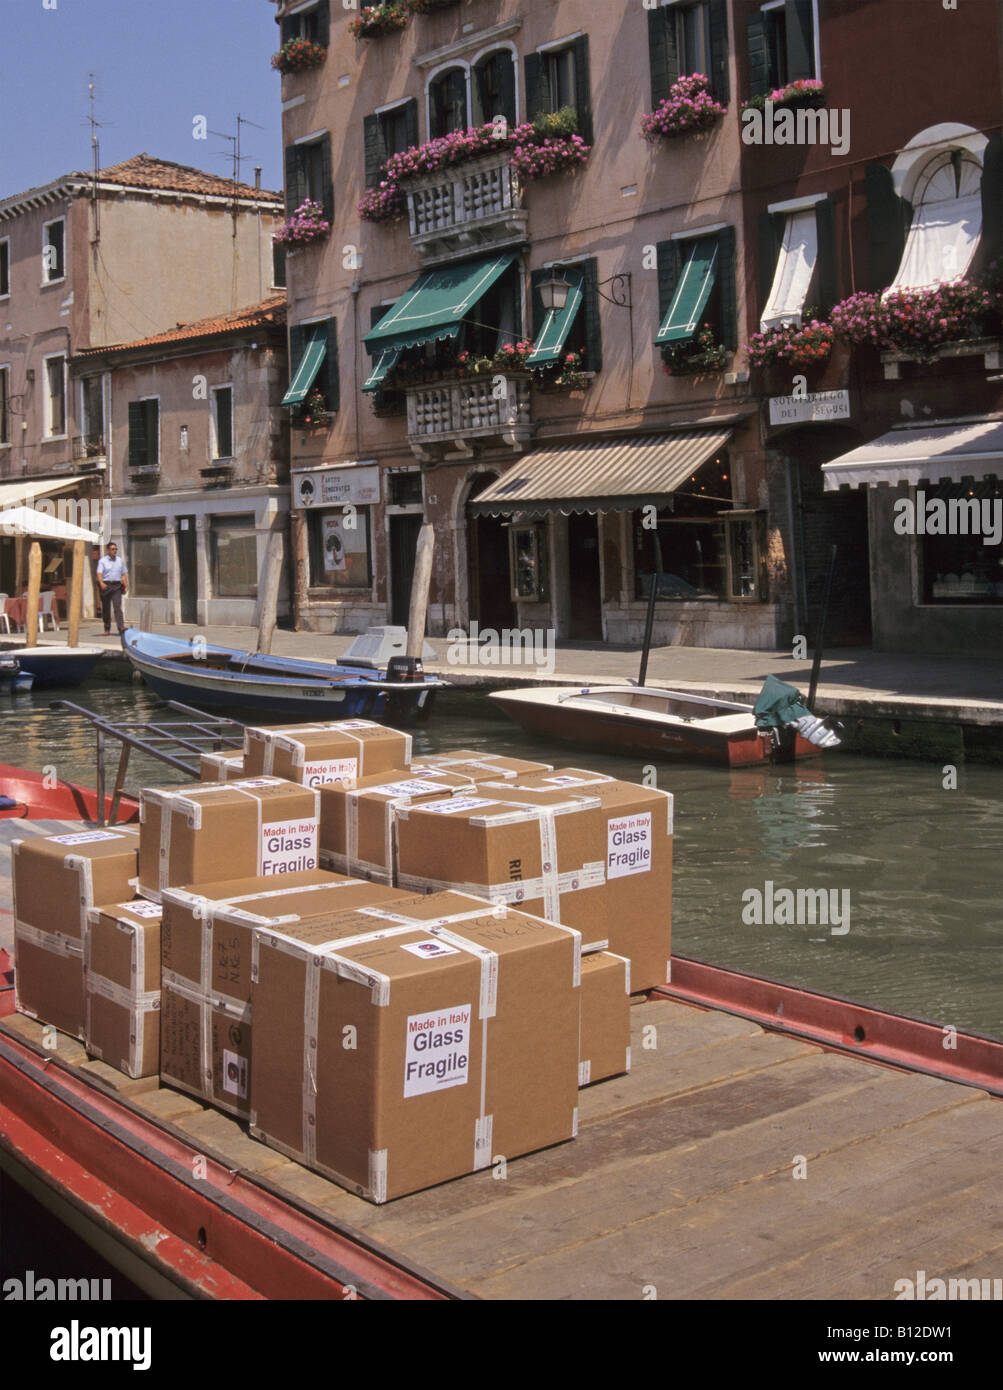 Kartons mit Glas-Produkte auf dem Boot vertäut am Rio dei Vetrai Kanal Insel Murano Venedig Italien Stockfoto